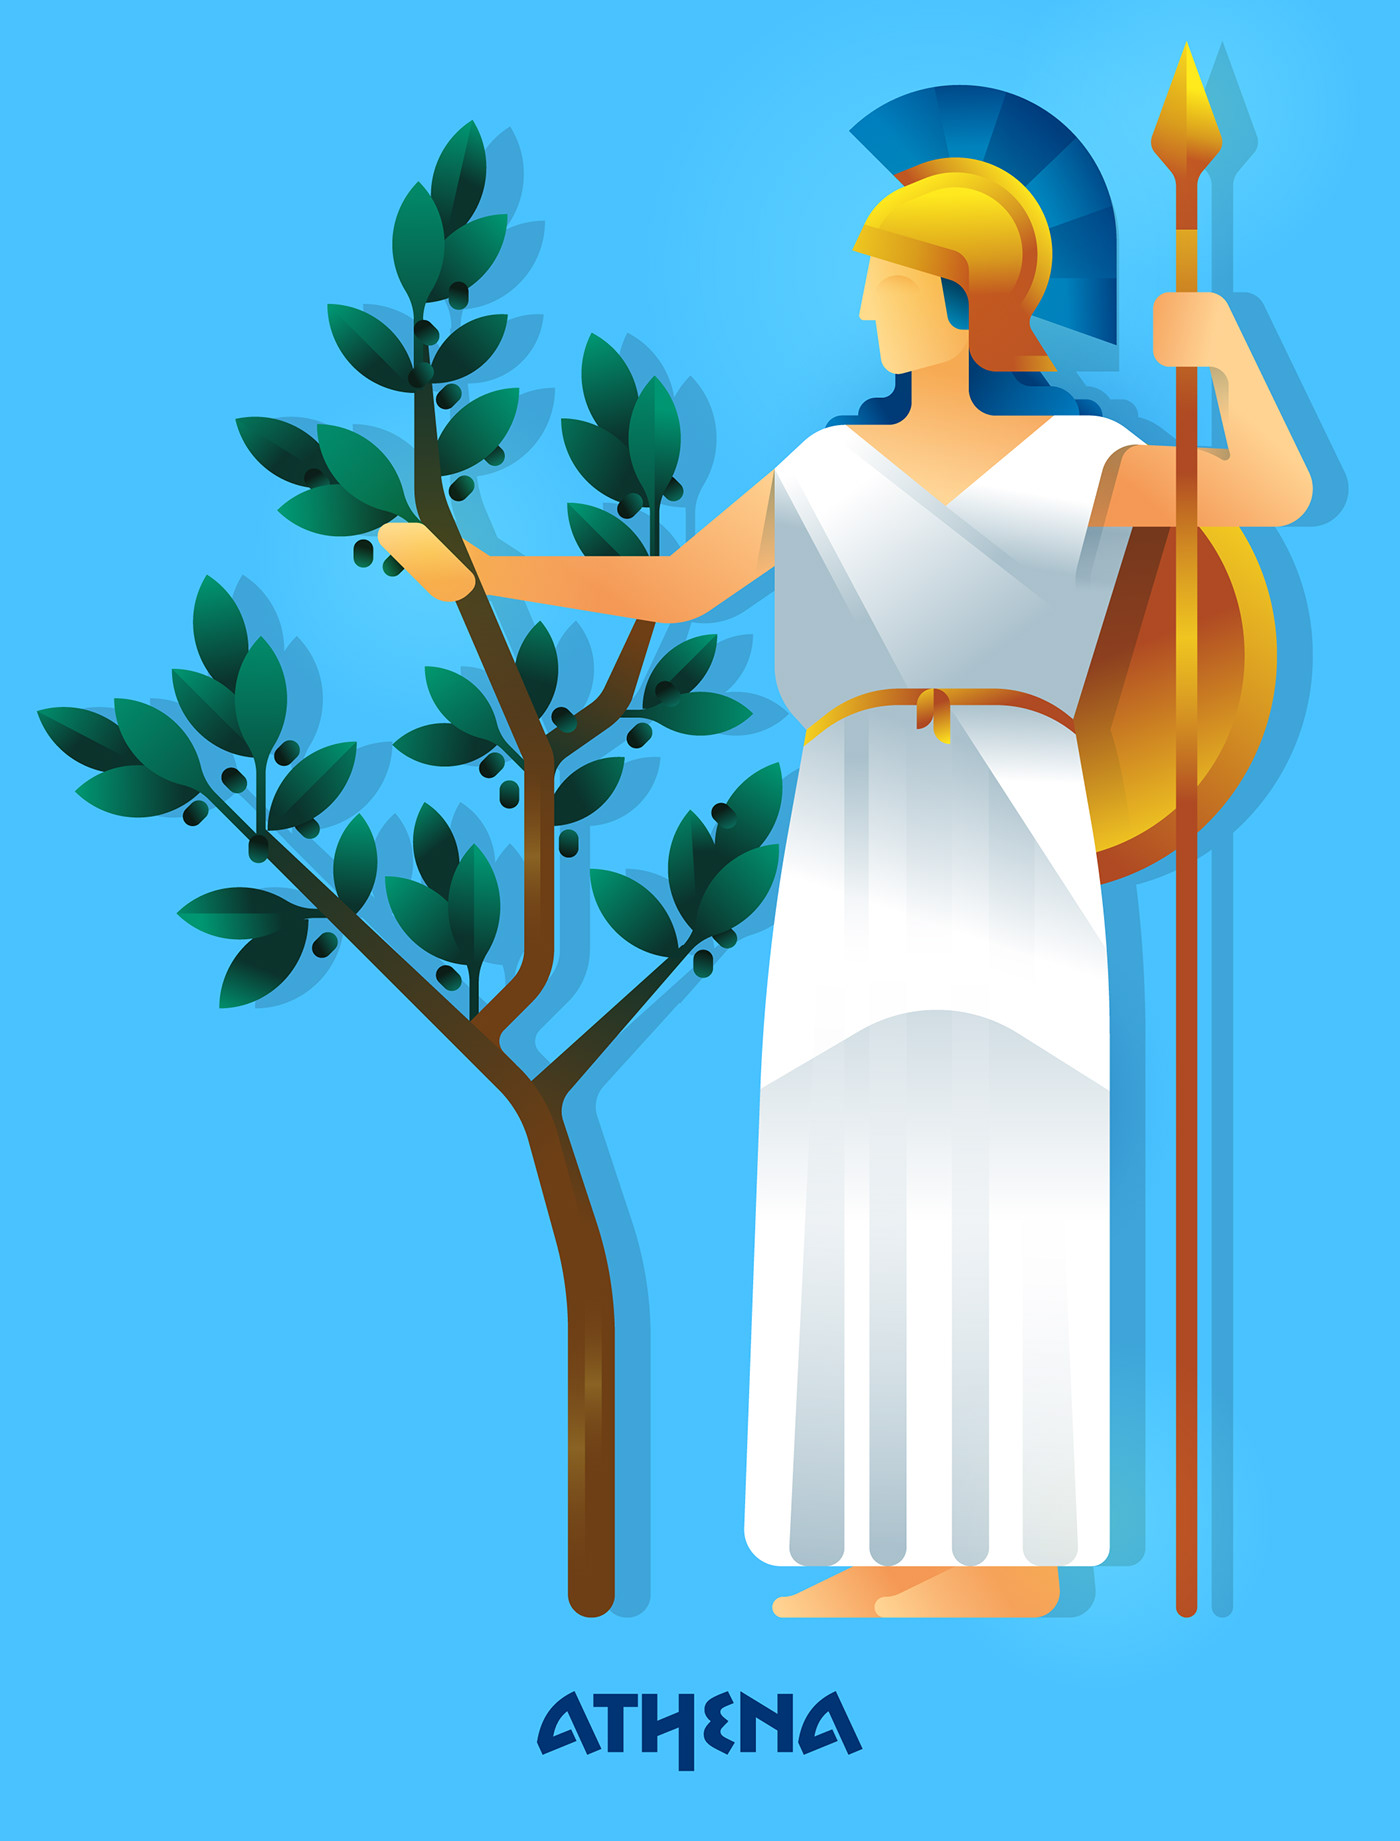 athena athens gods Greece greek mithology myth statue symbol